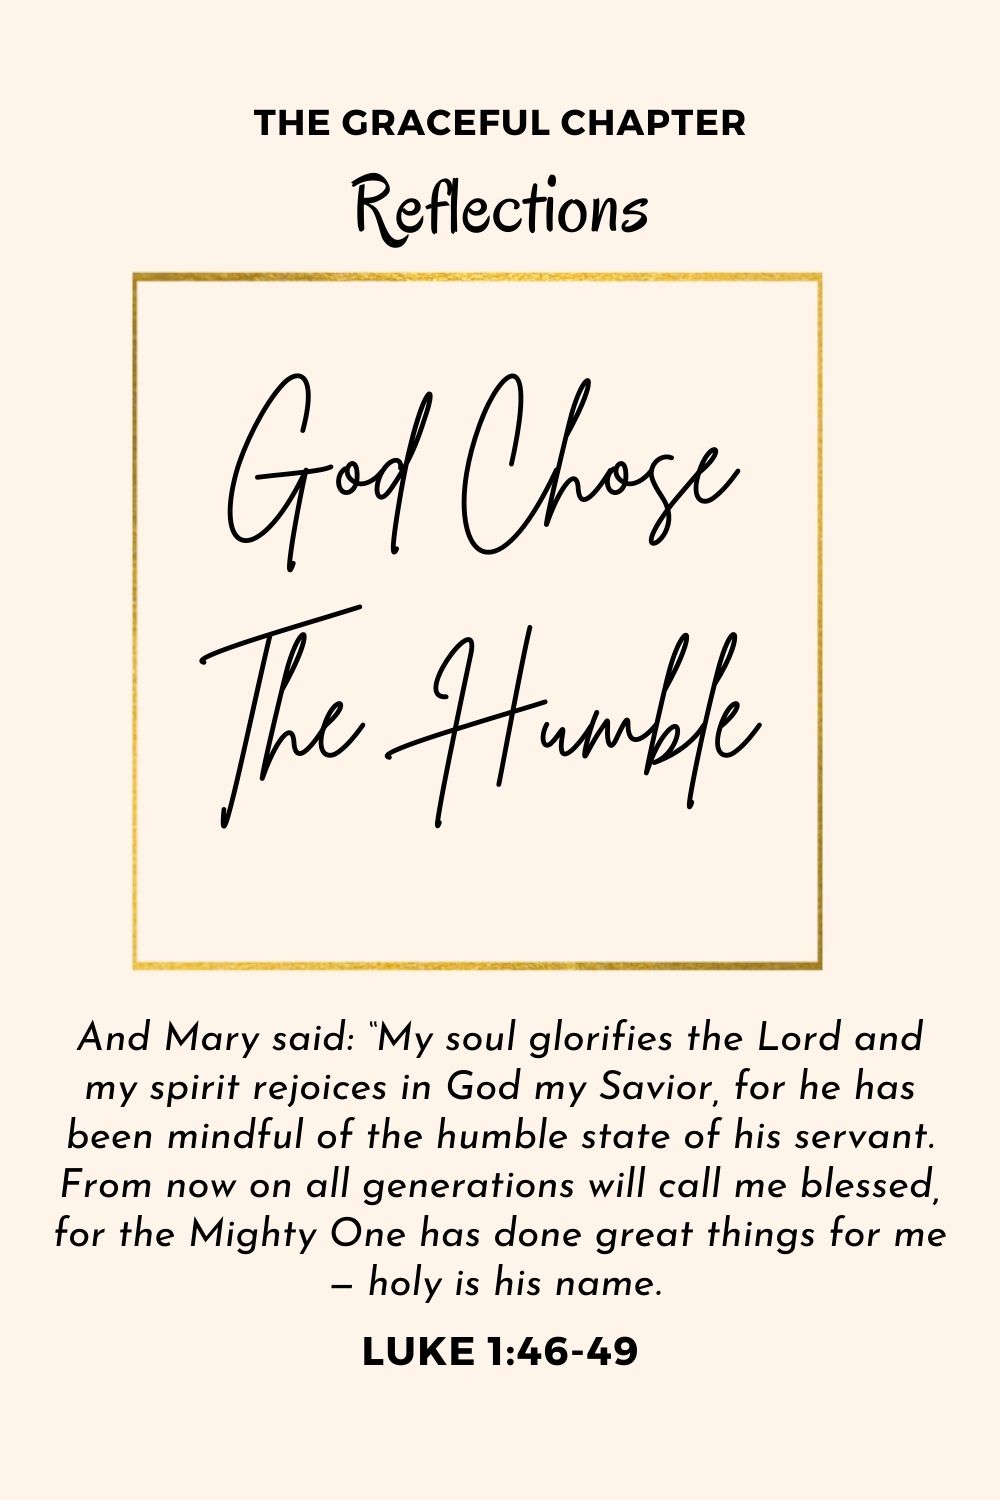 Reflection - Luke 1:46-49 - God Chose The Humble